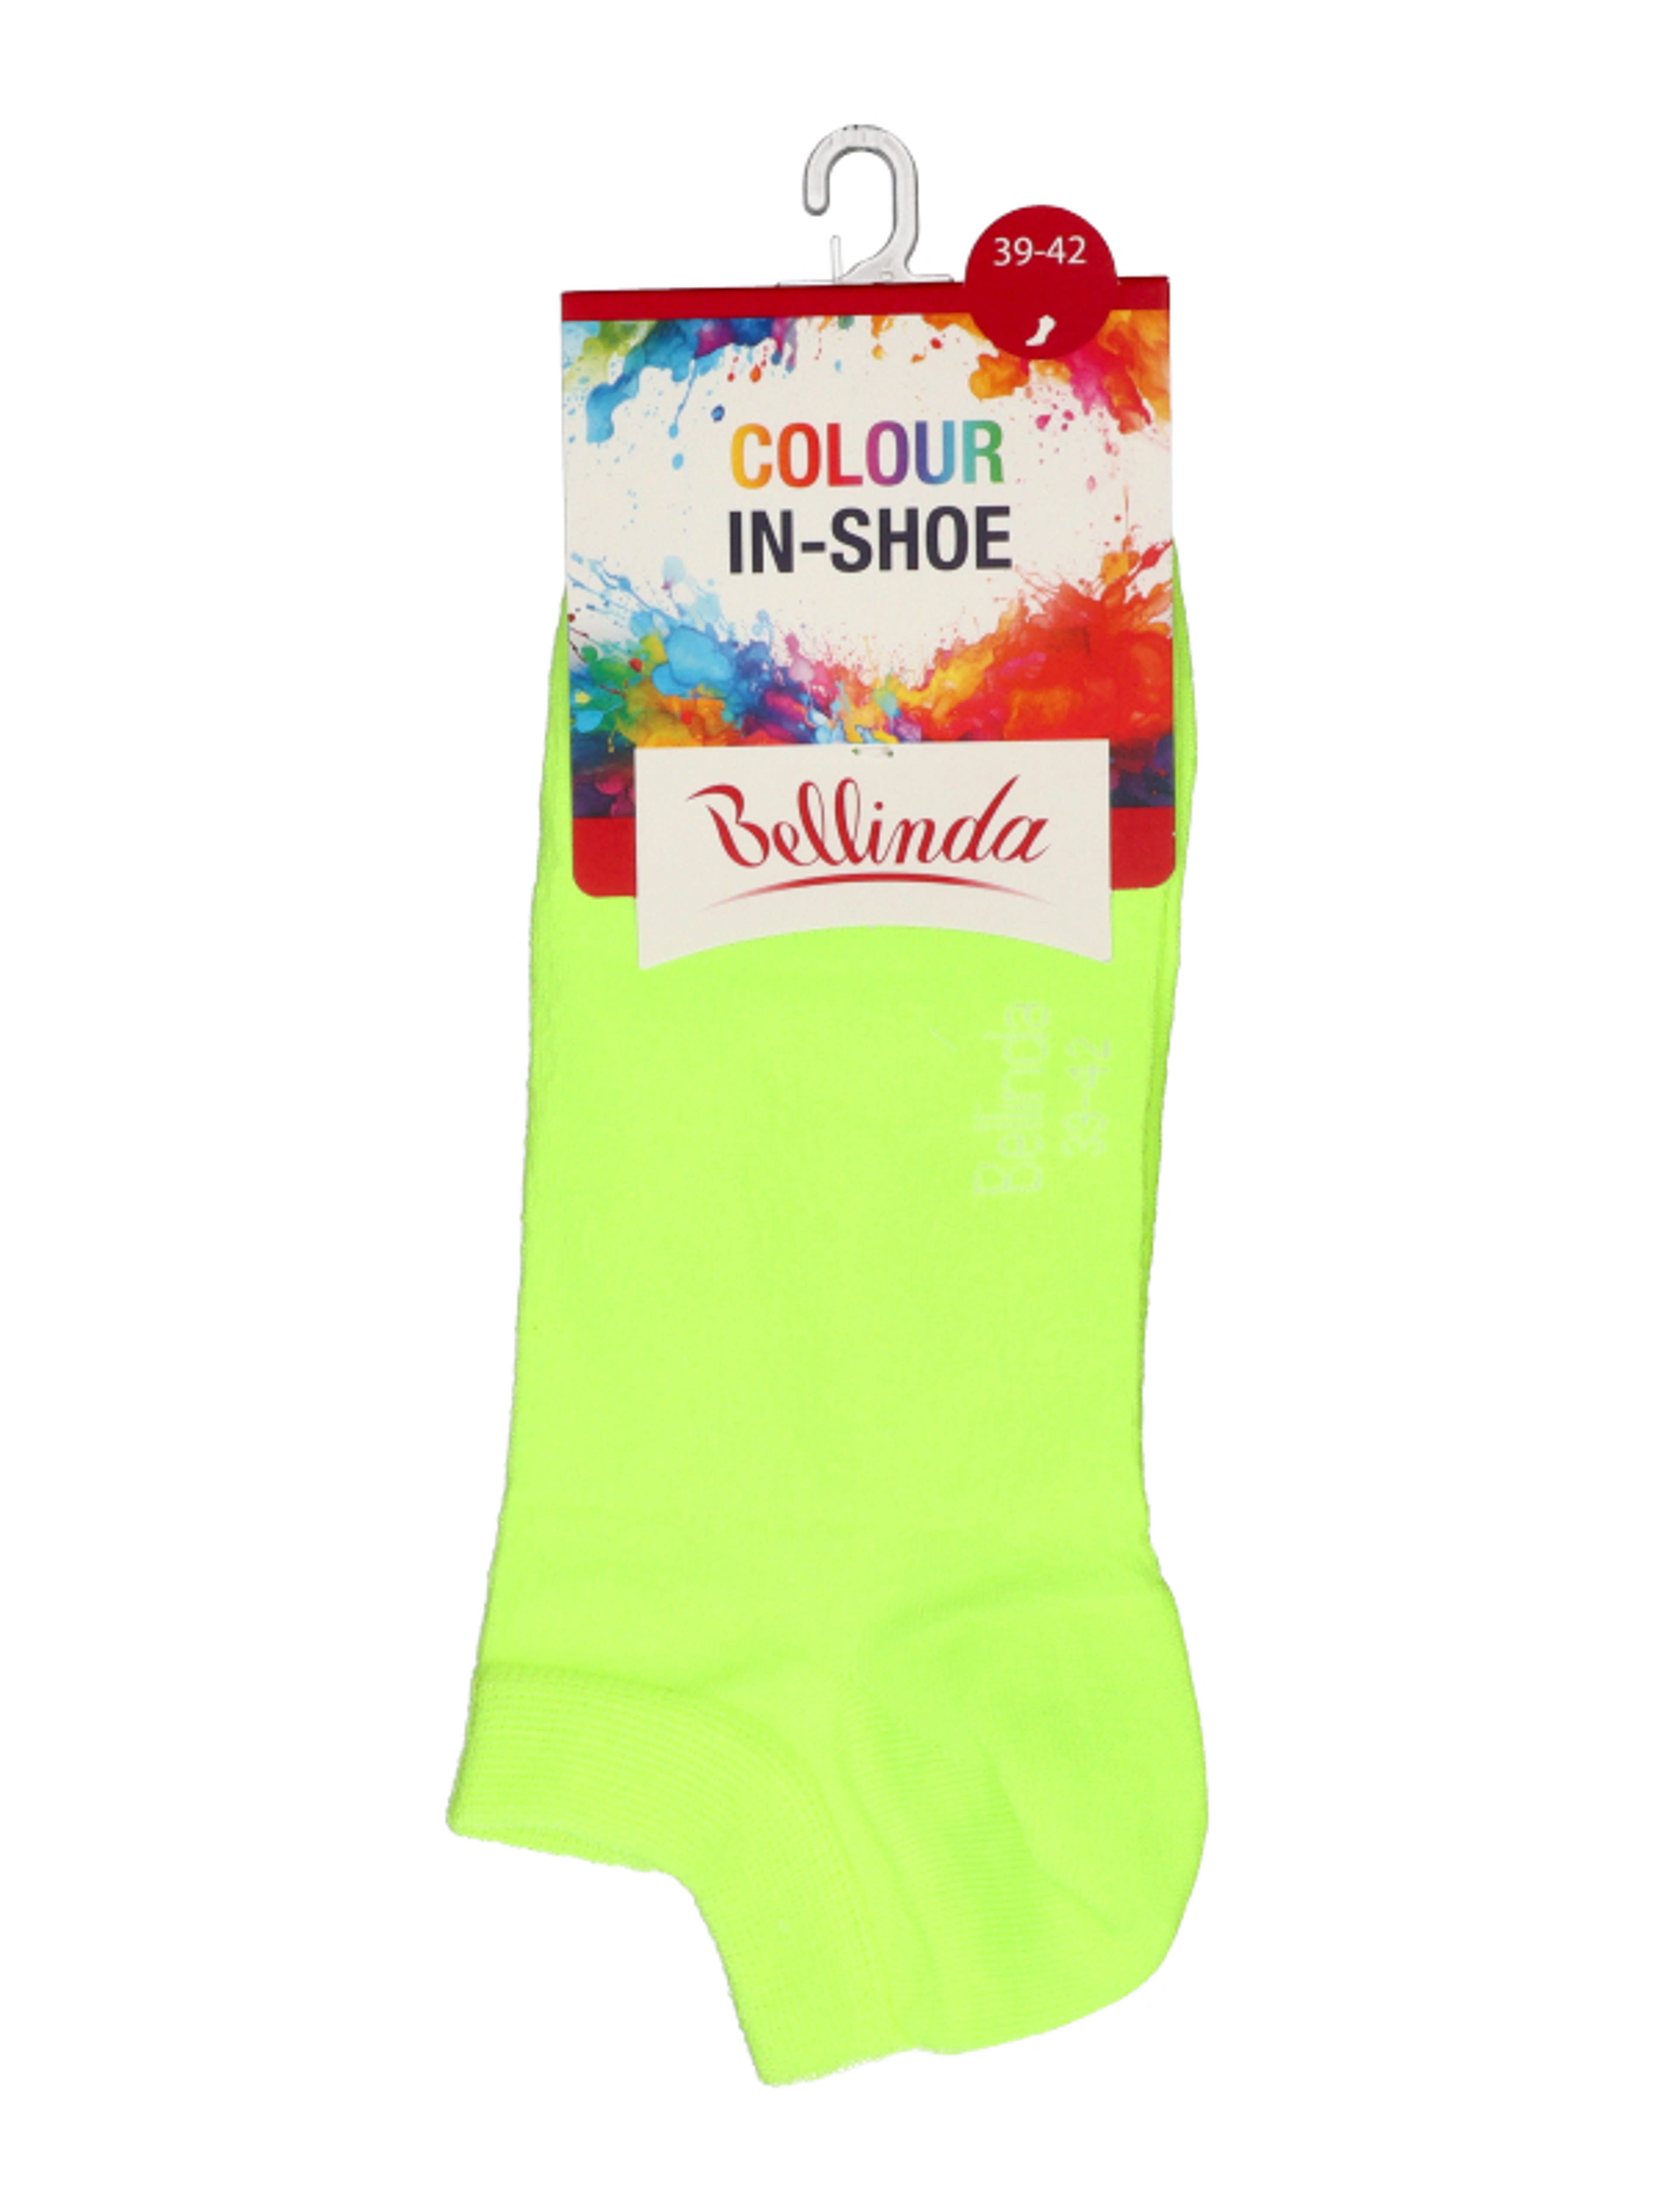 Bellina In-Shoe női zokni /neon zöld 39-42 - 1 db-1